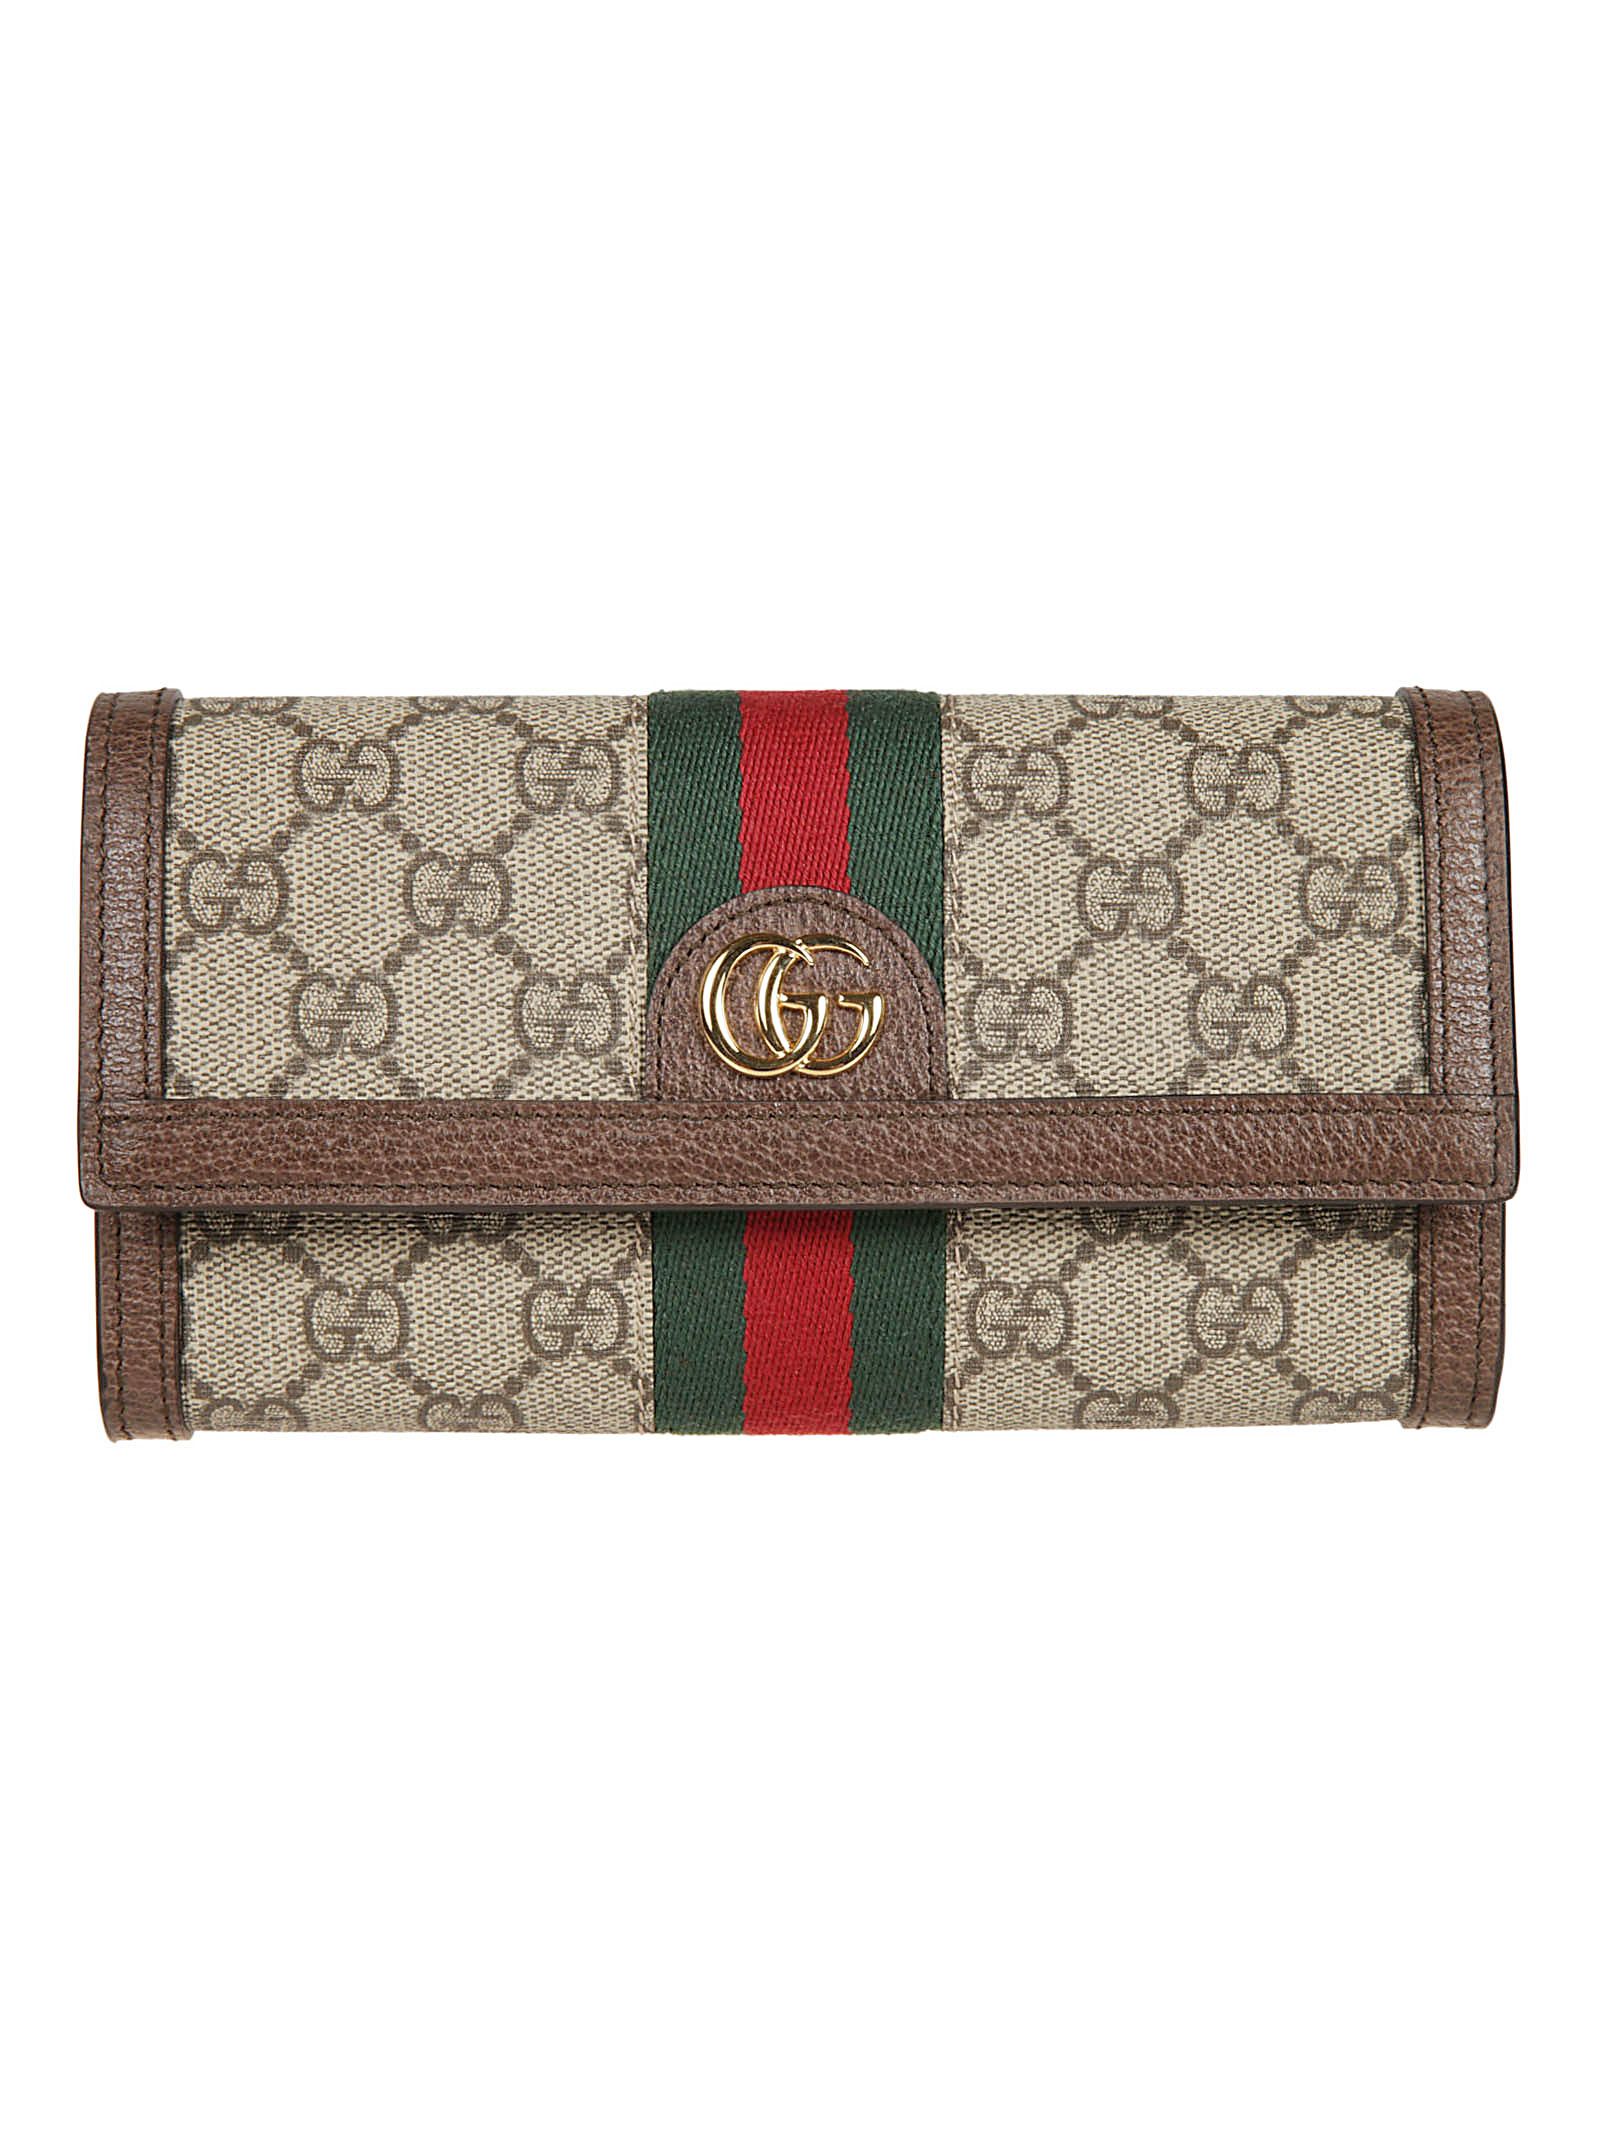 Gucci Ophidia Gg Continental Wallet - Beige ebony - 10667455 | italist